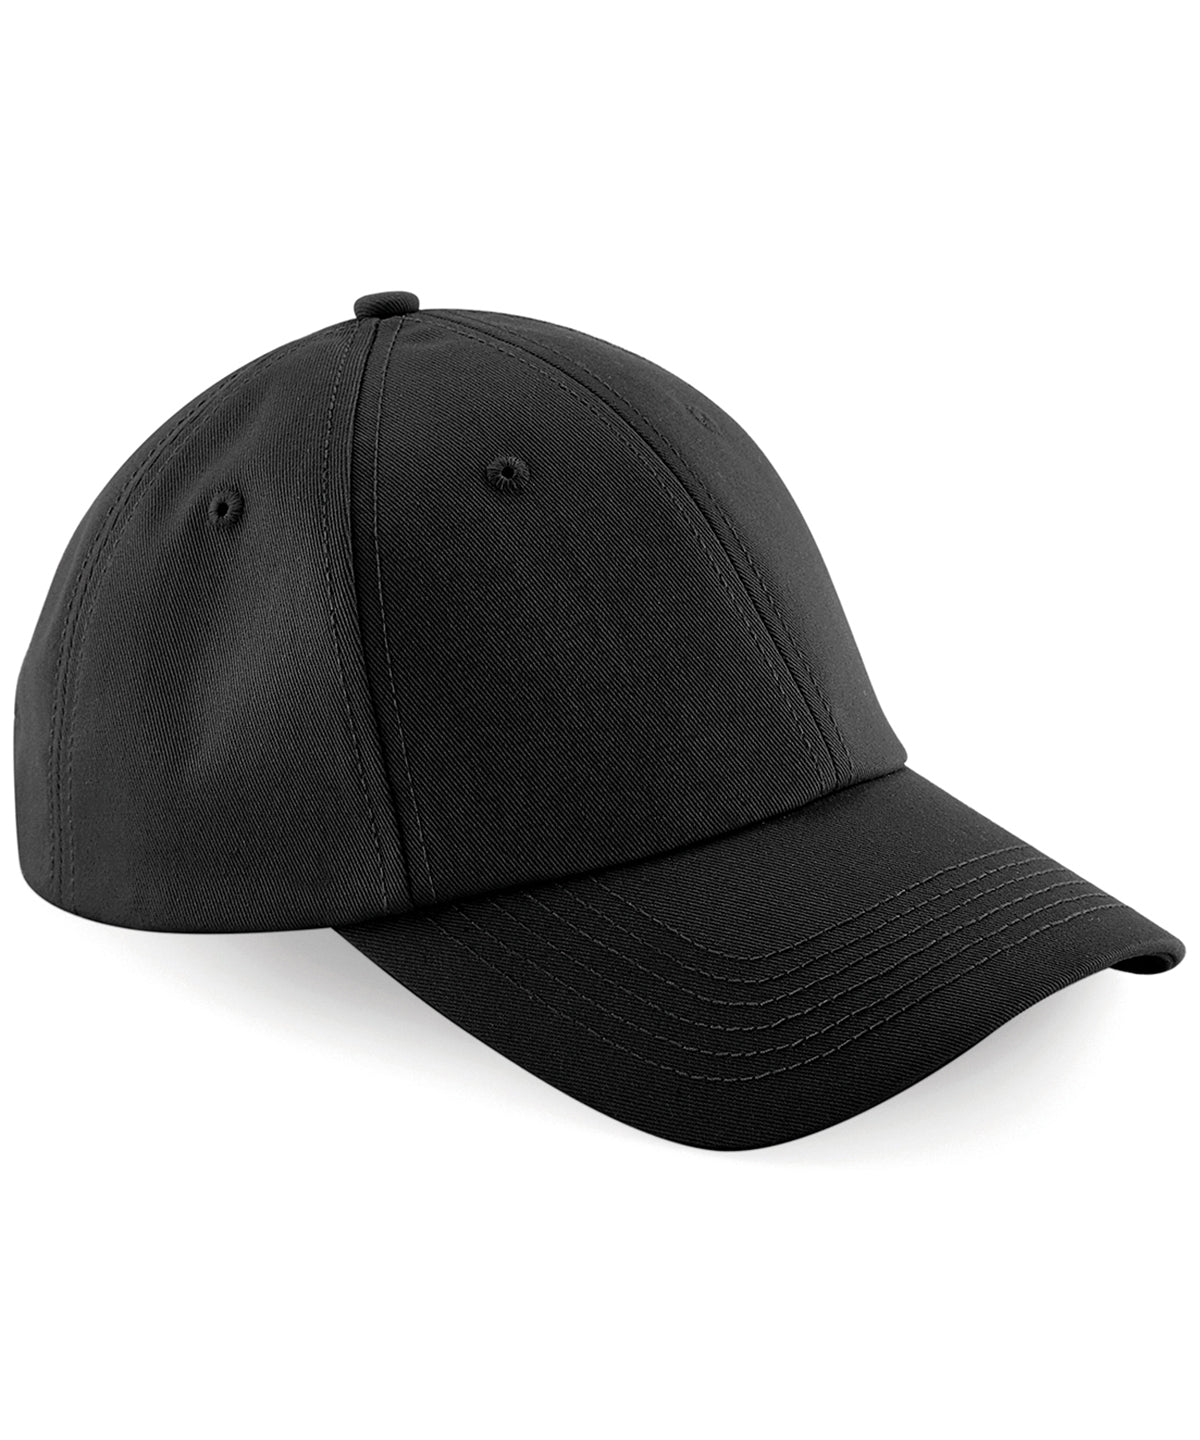 Personalised Caps - Black Beechfield Authentic baseball cap